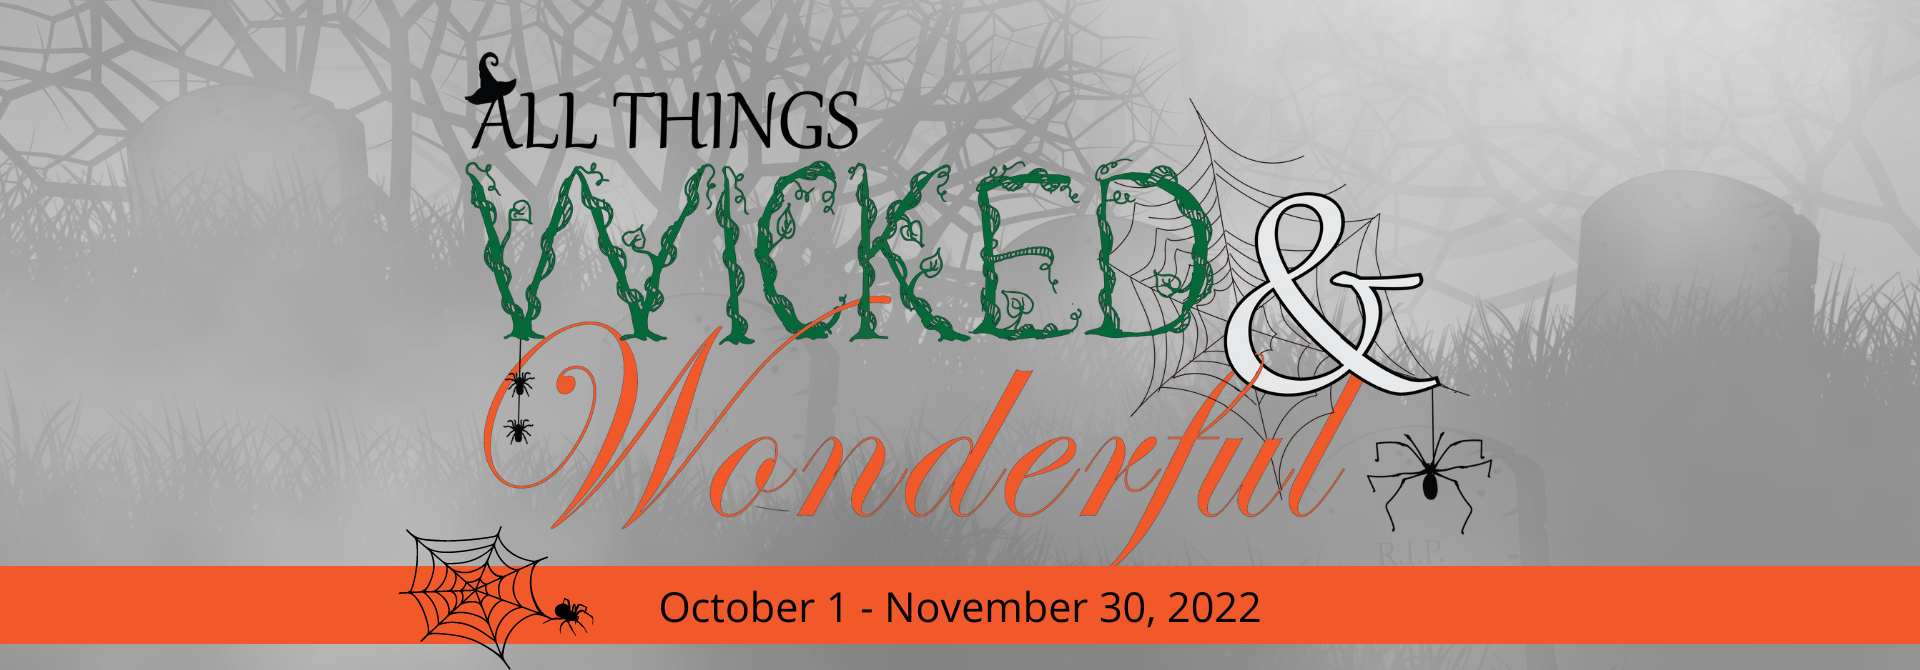 All Things Wicked & Wonderful Landing Page Header